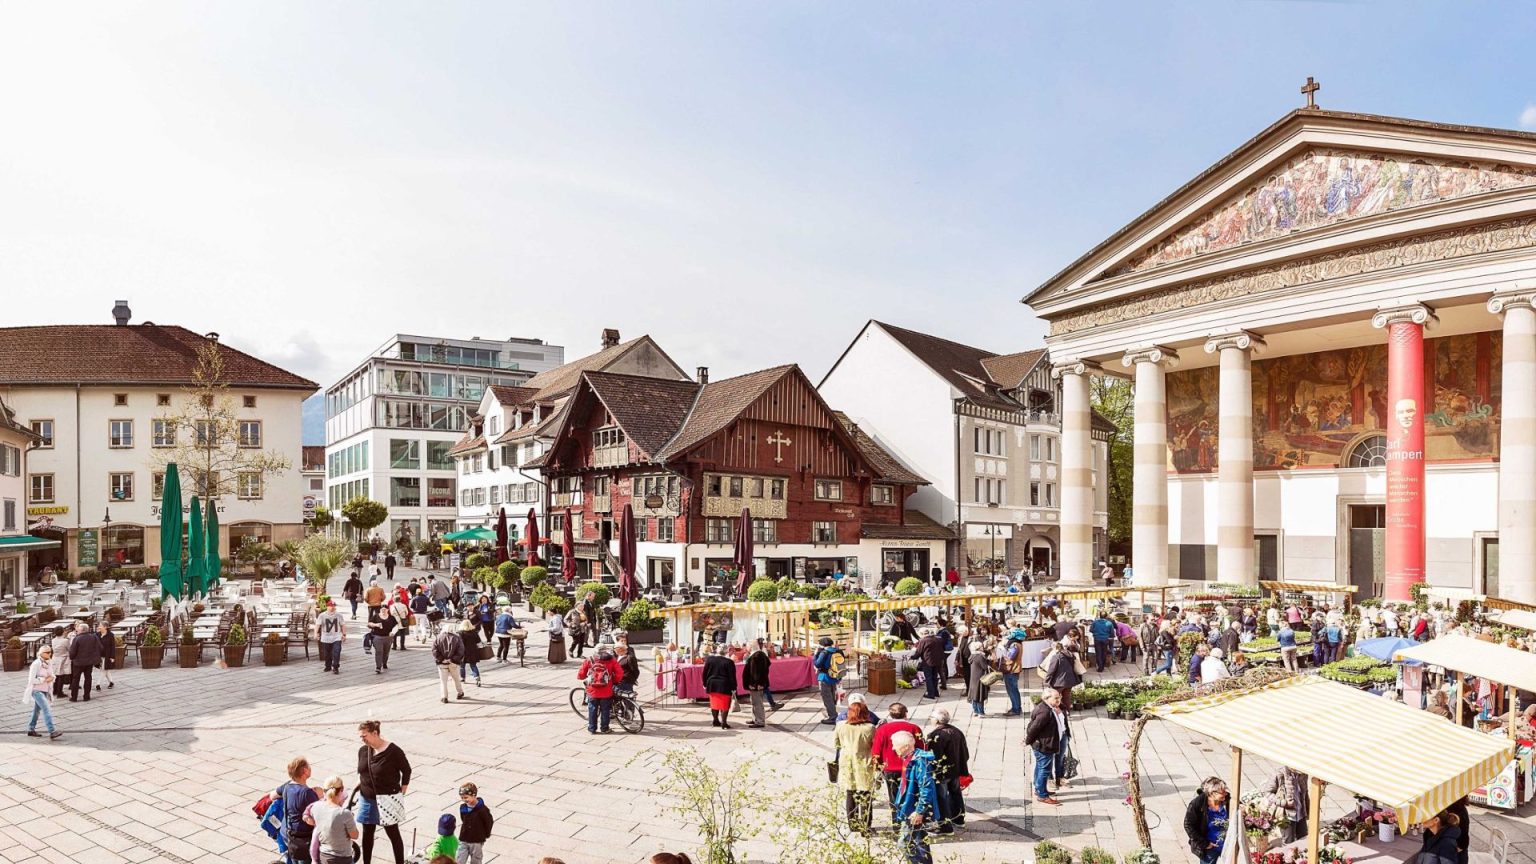 Marktplatz Dornbirn in Vorarlberg